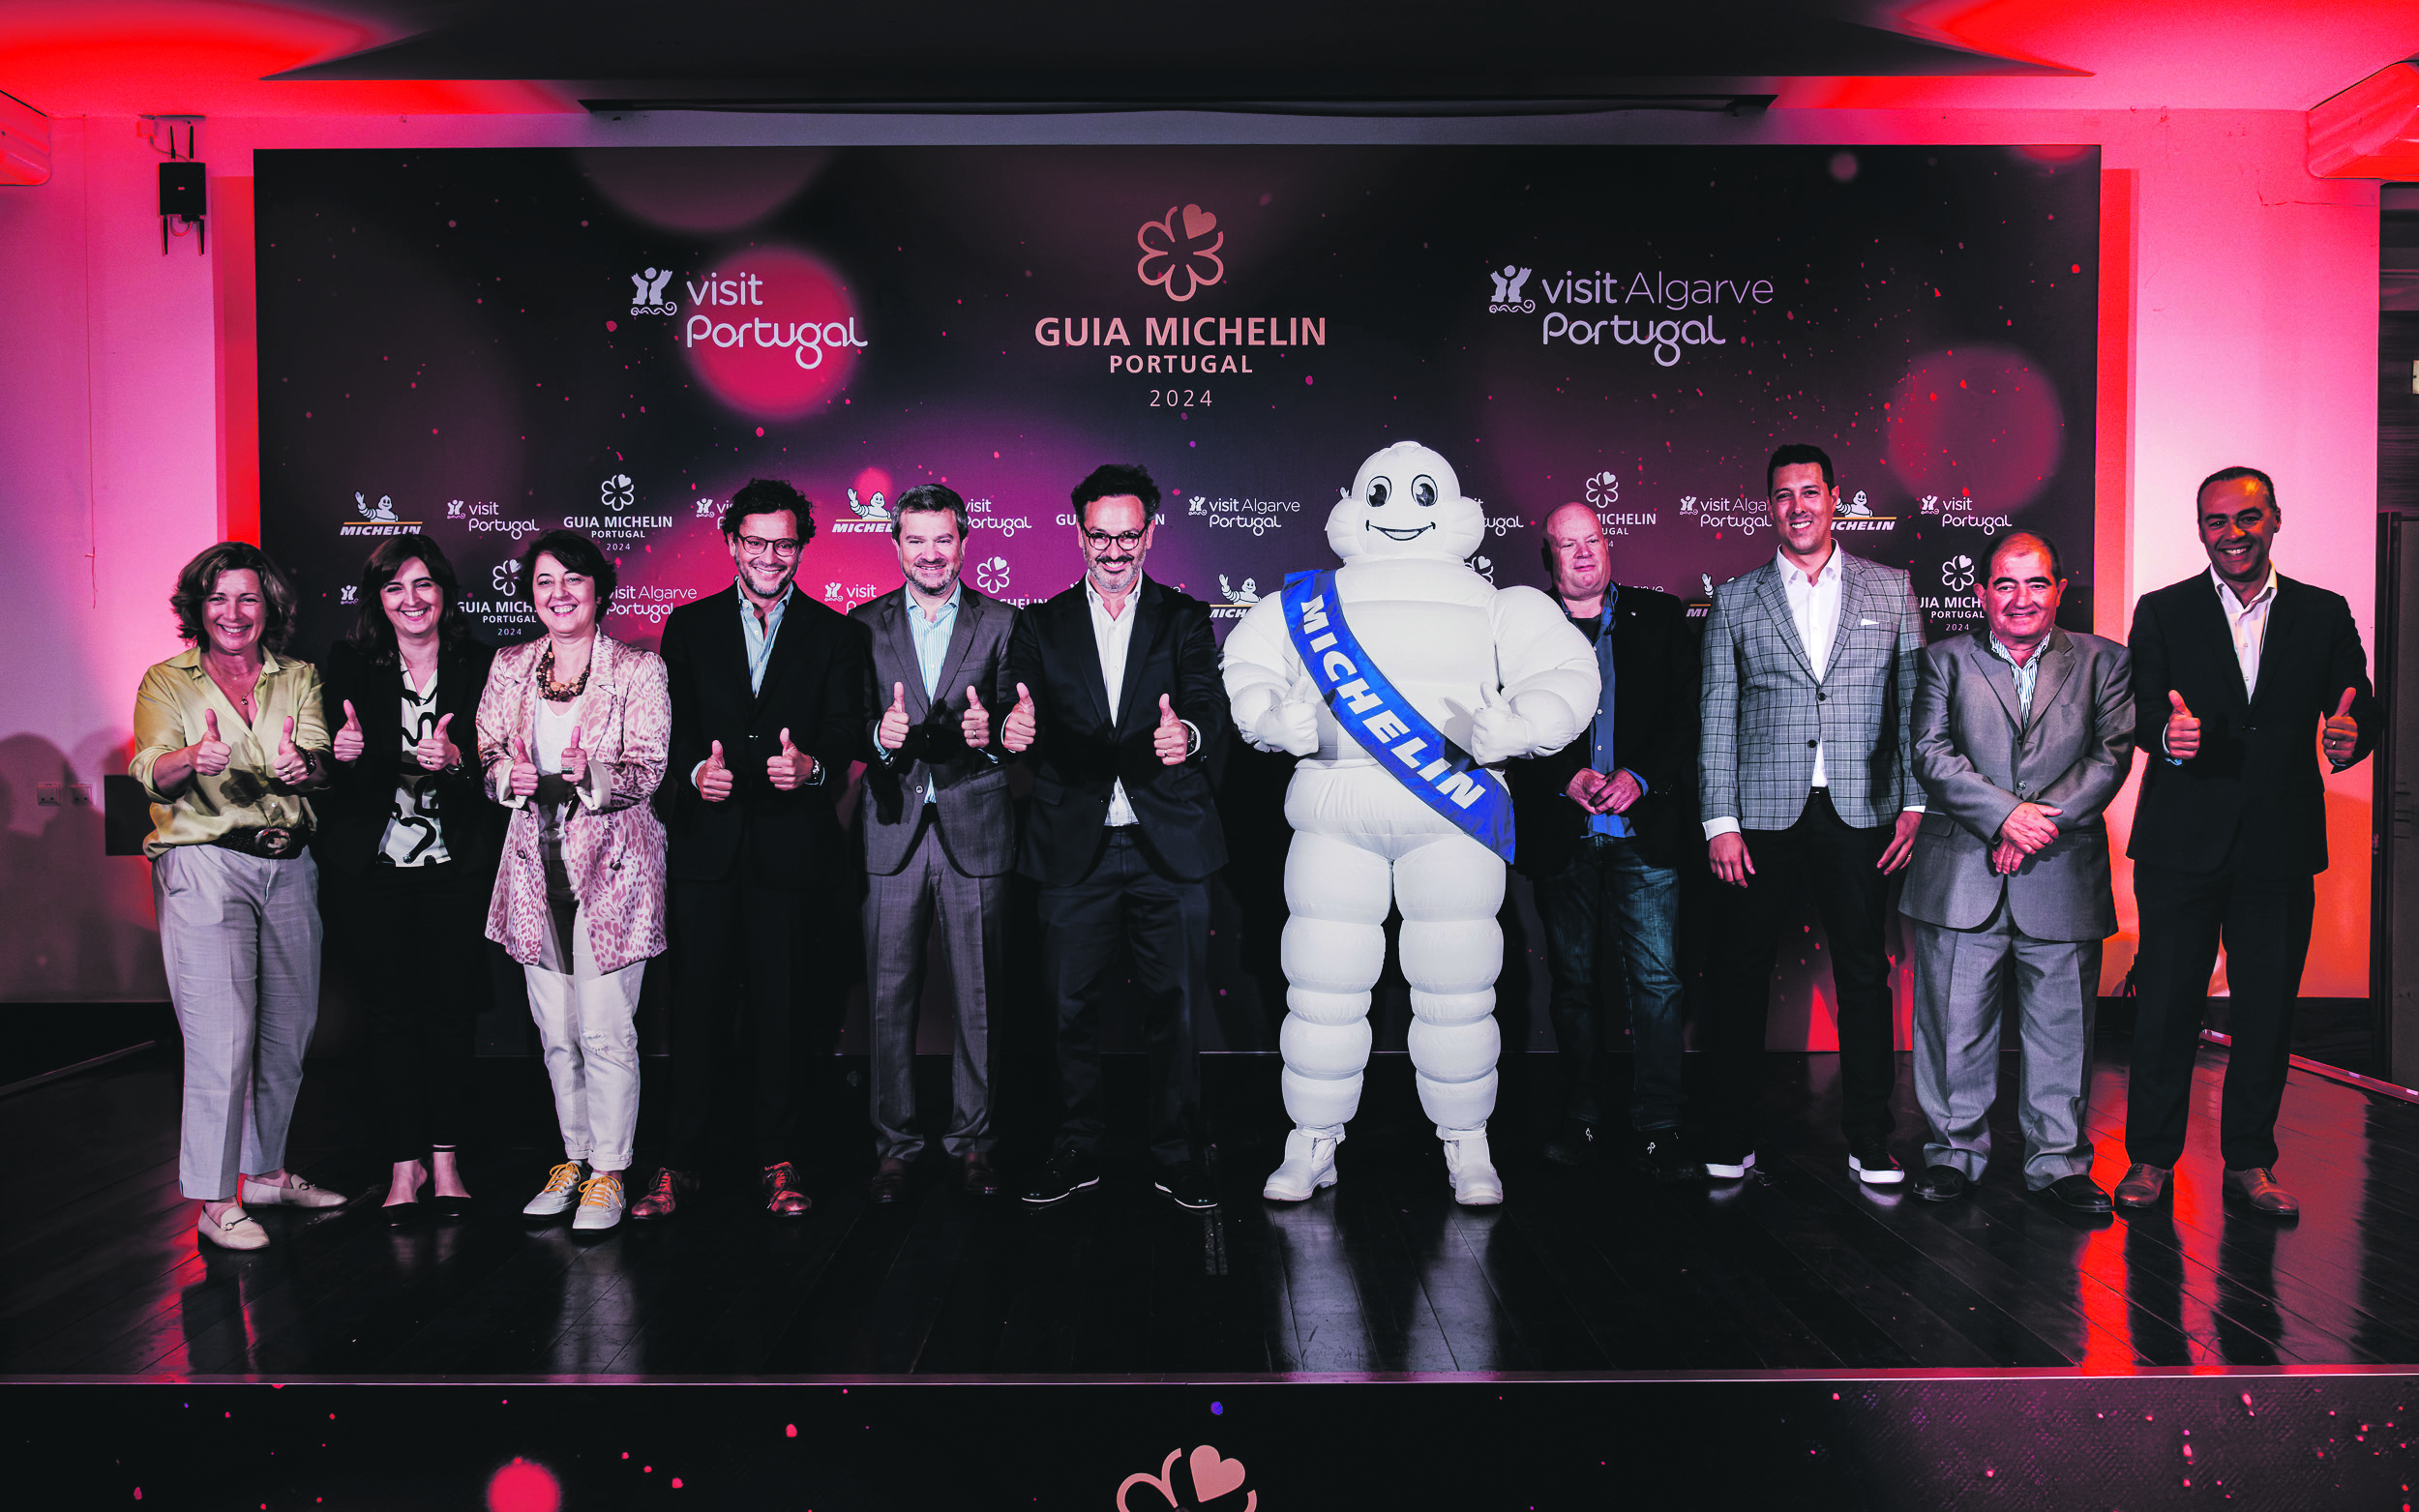 Algarve acolhe a primeira gala portuguesa do Guia Michelin